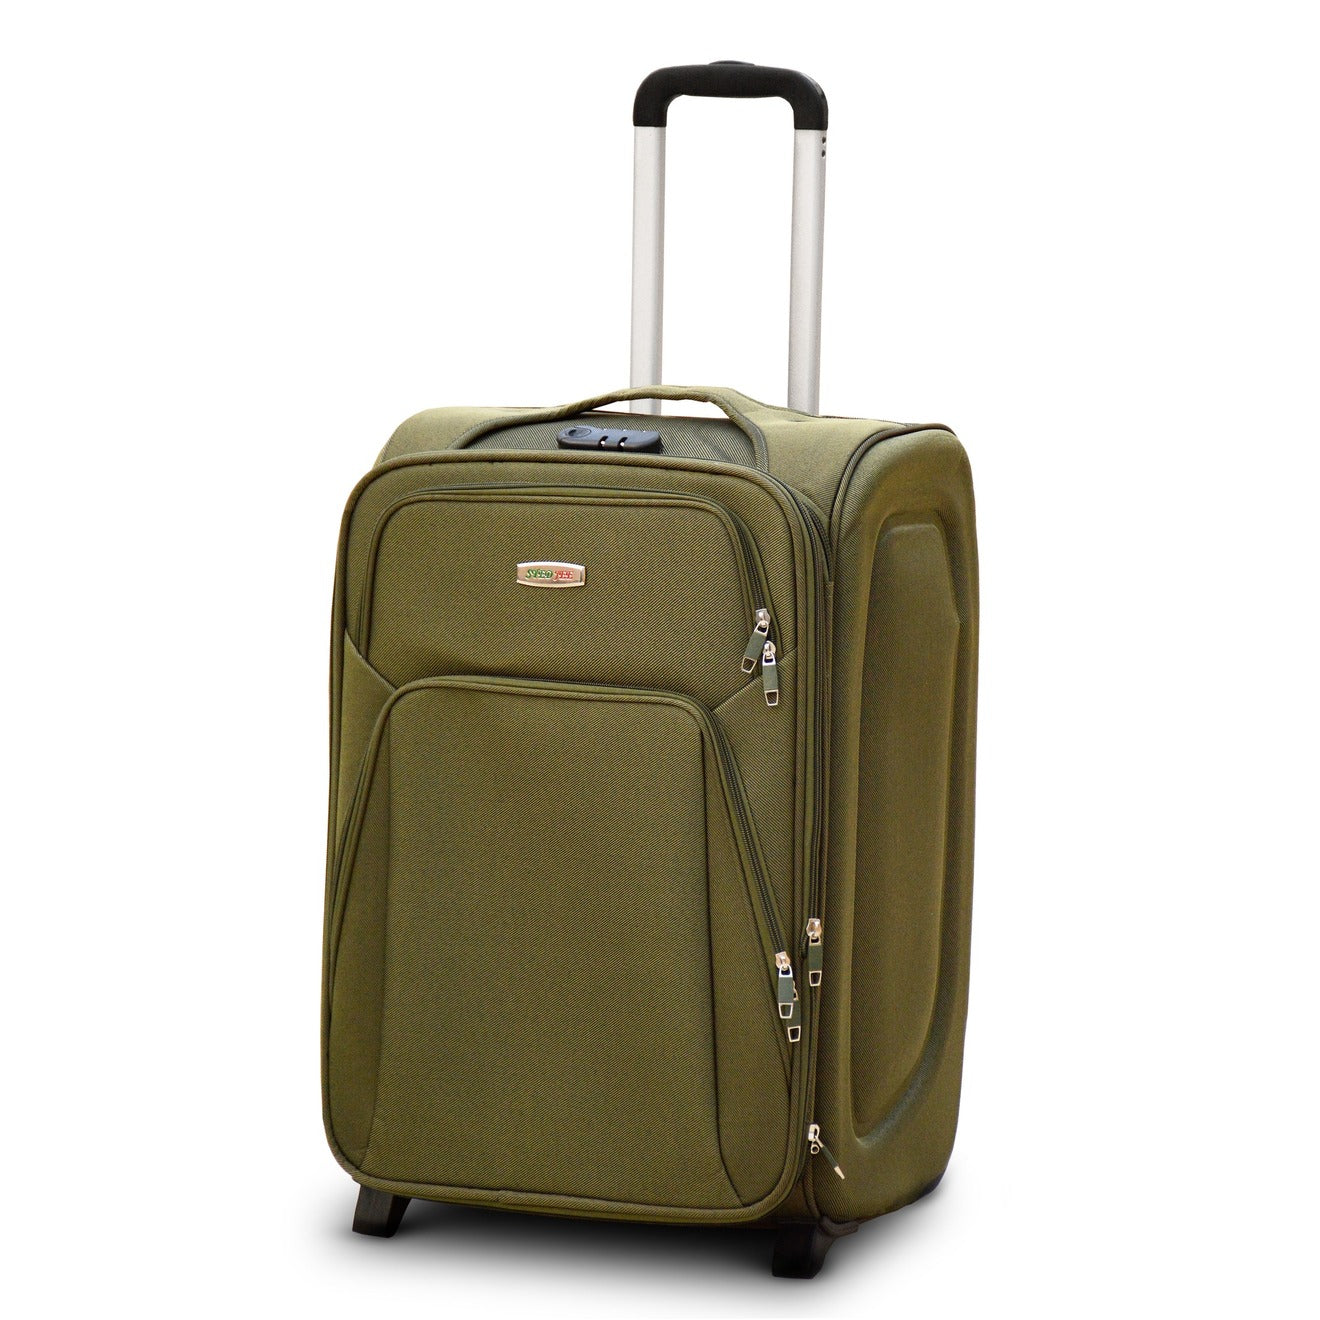 24" Light Green Colour SJ JIAN 2 Wheel Luggage Lightweight Soft Material Trolley Bag Zaappy.com